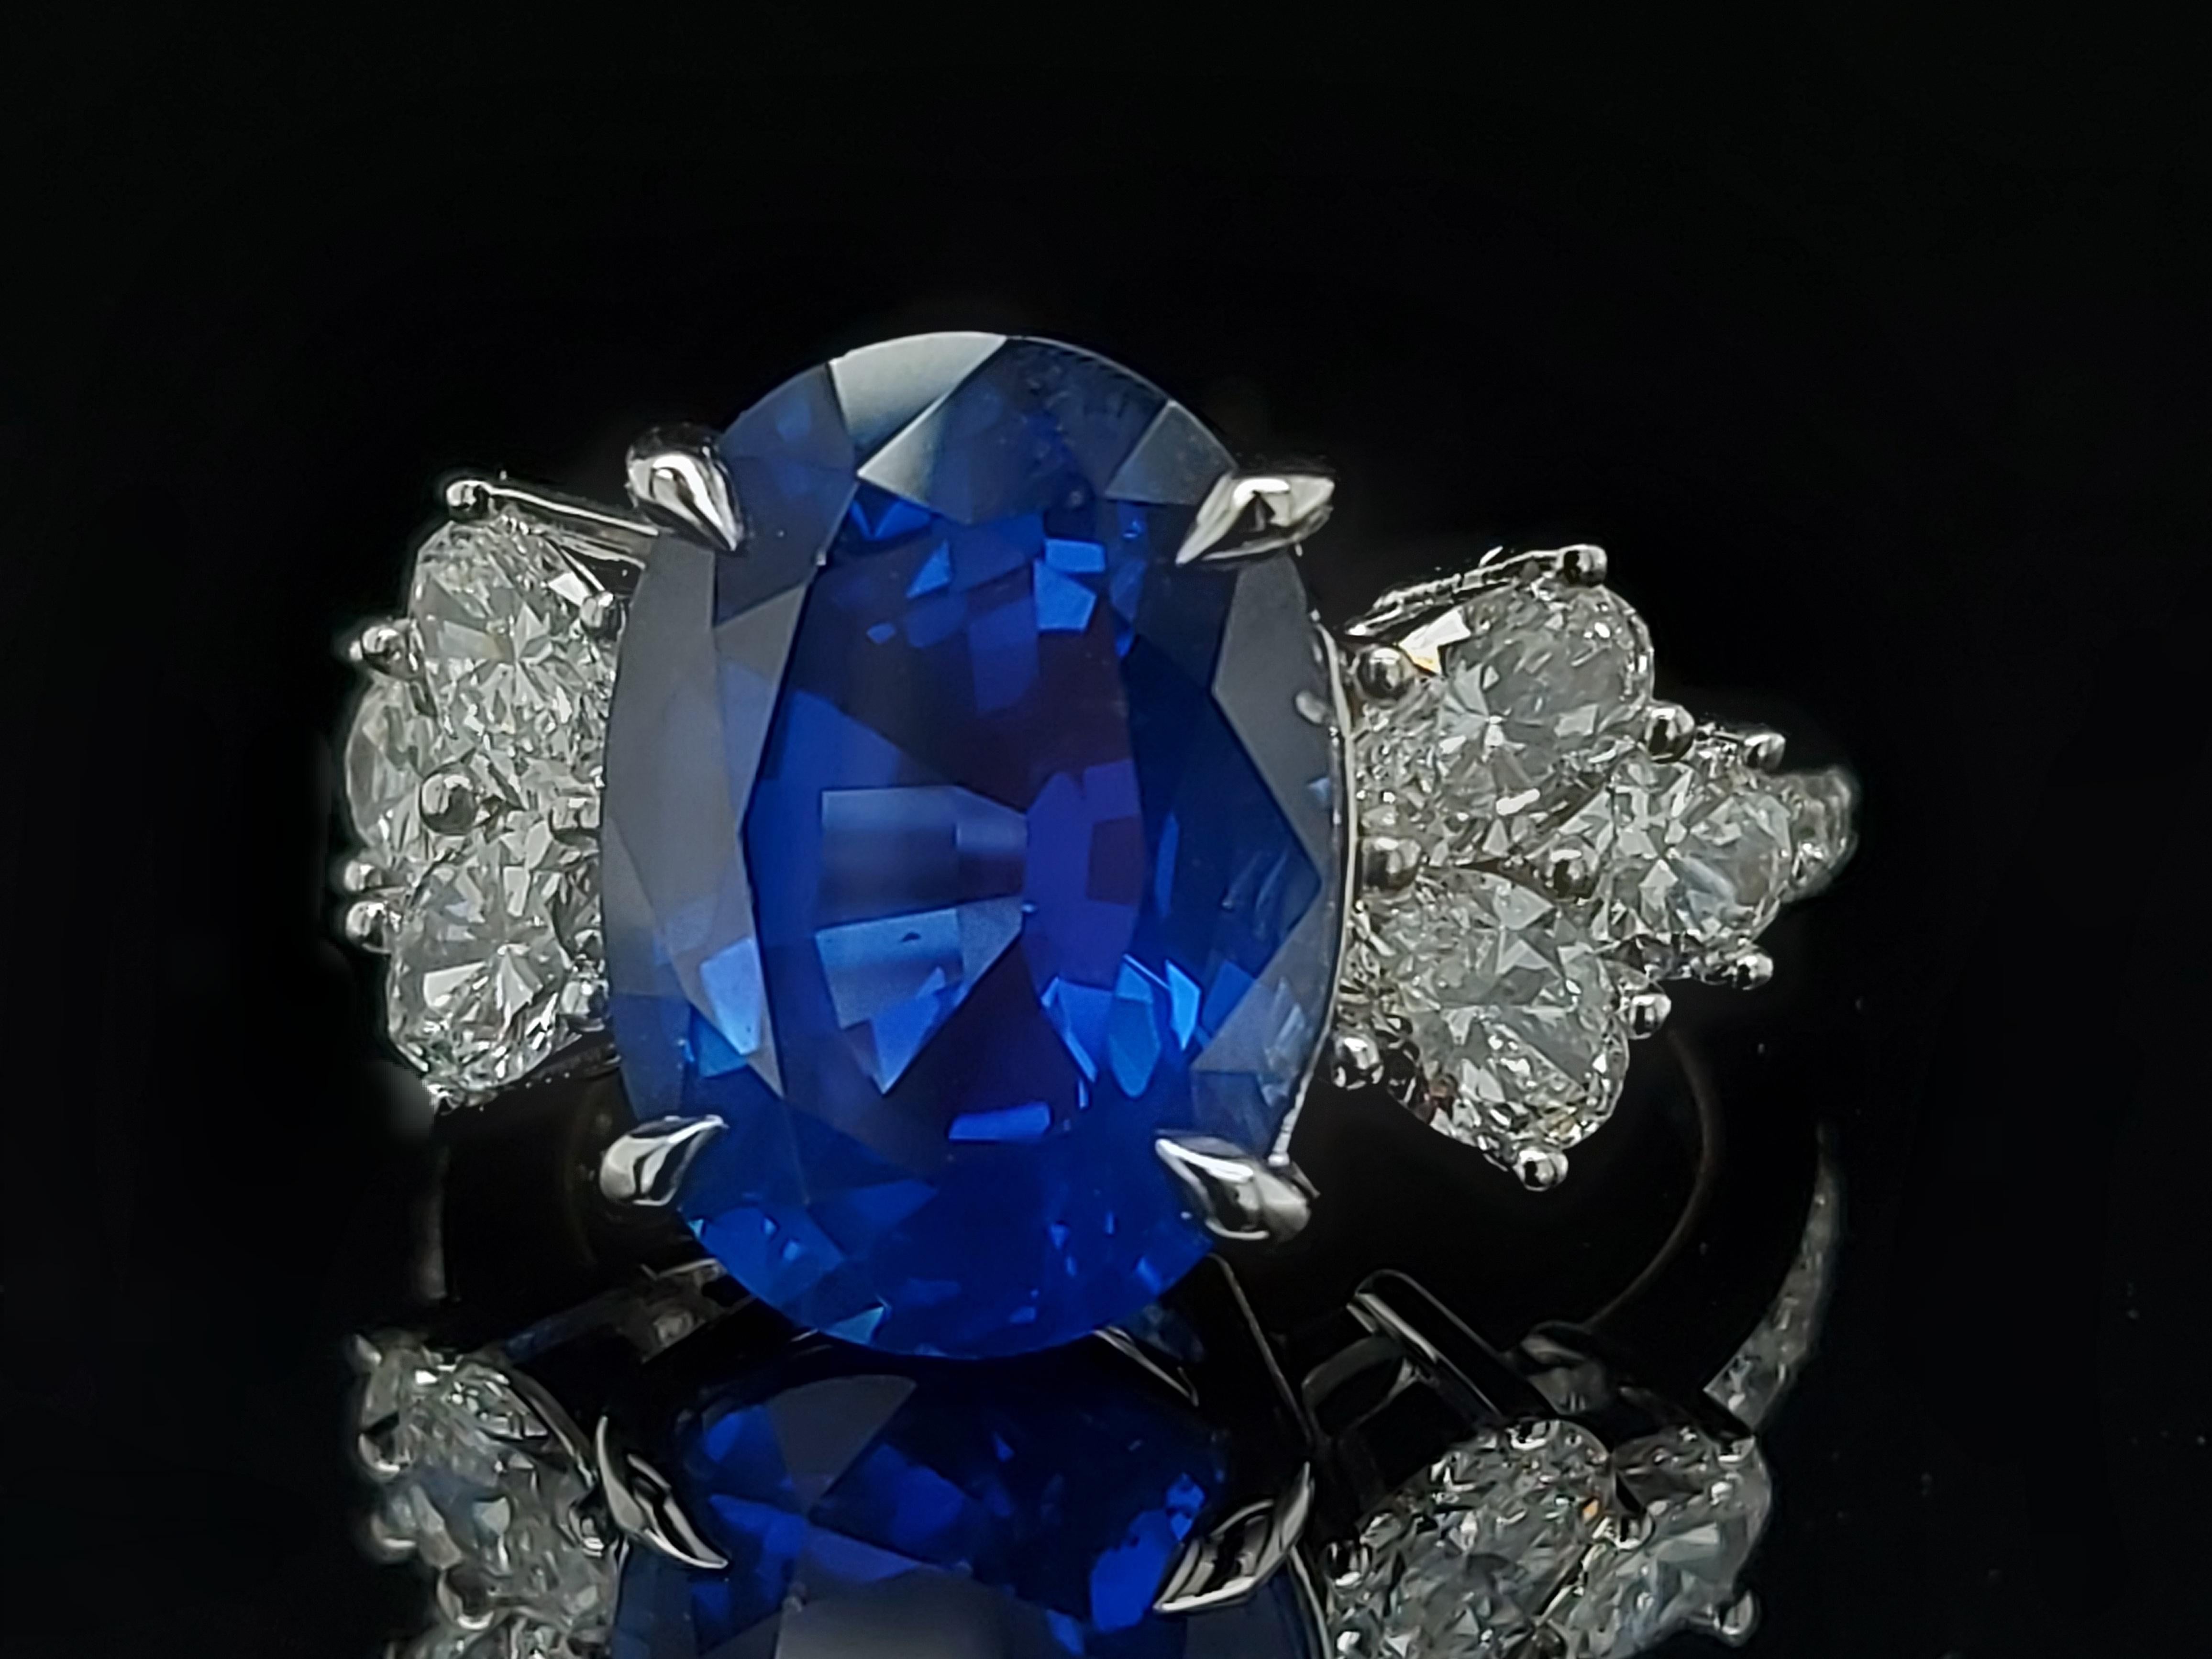 7 carat sapphire ring